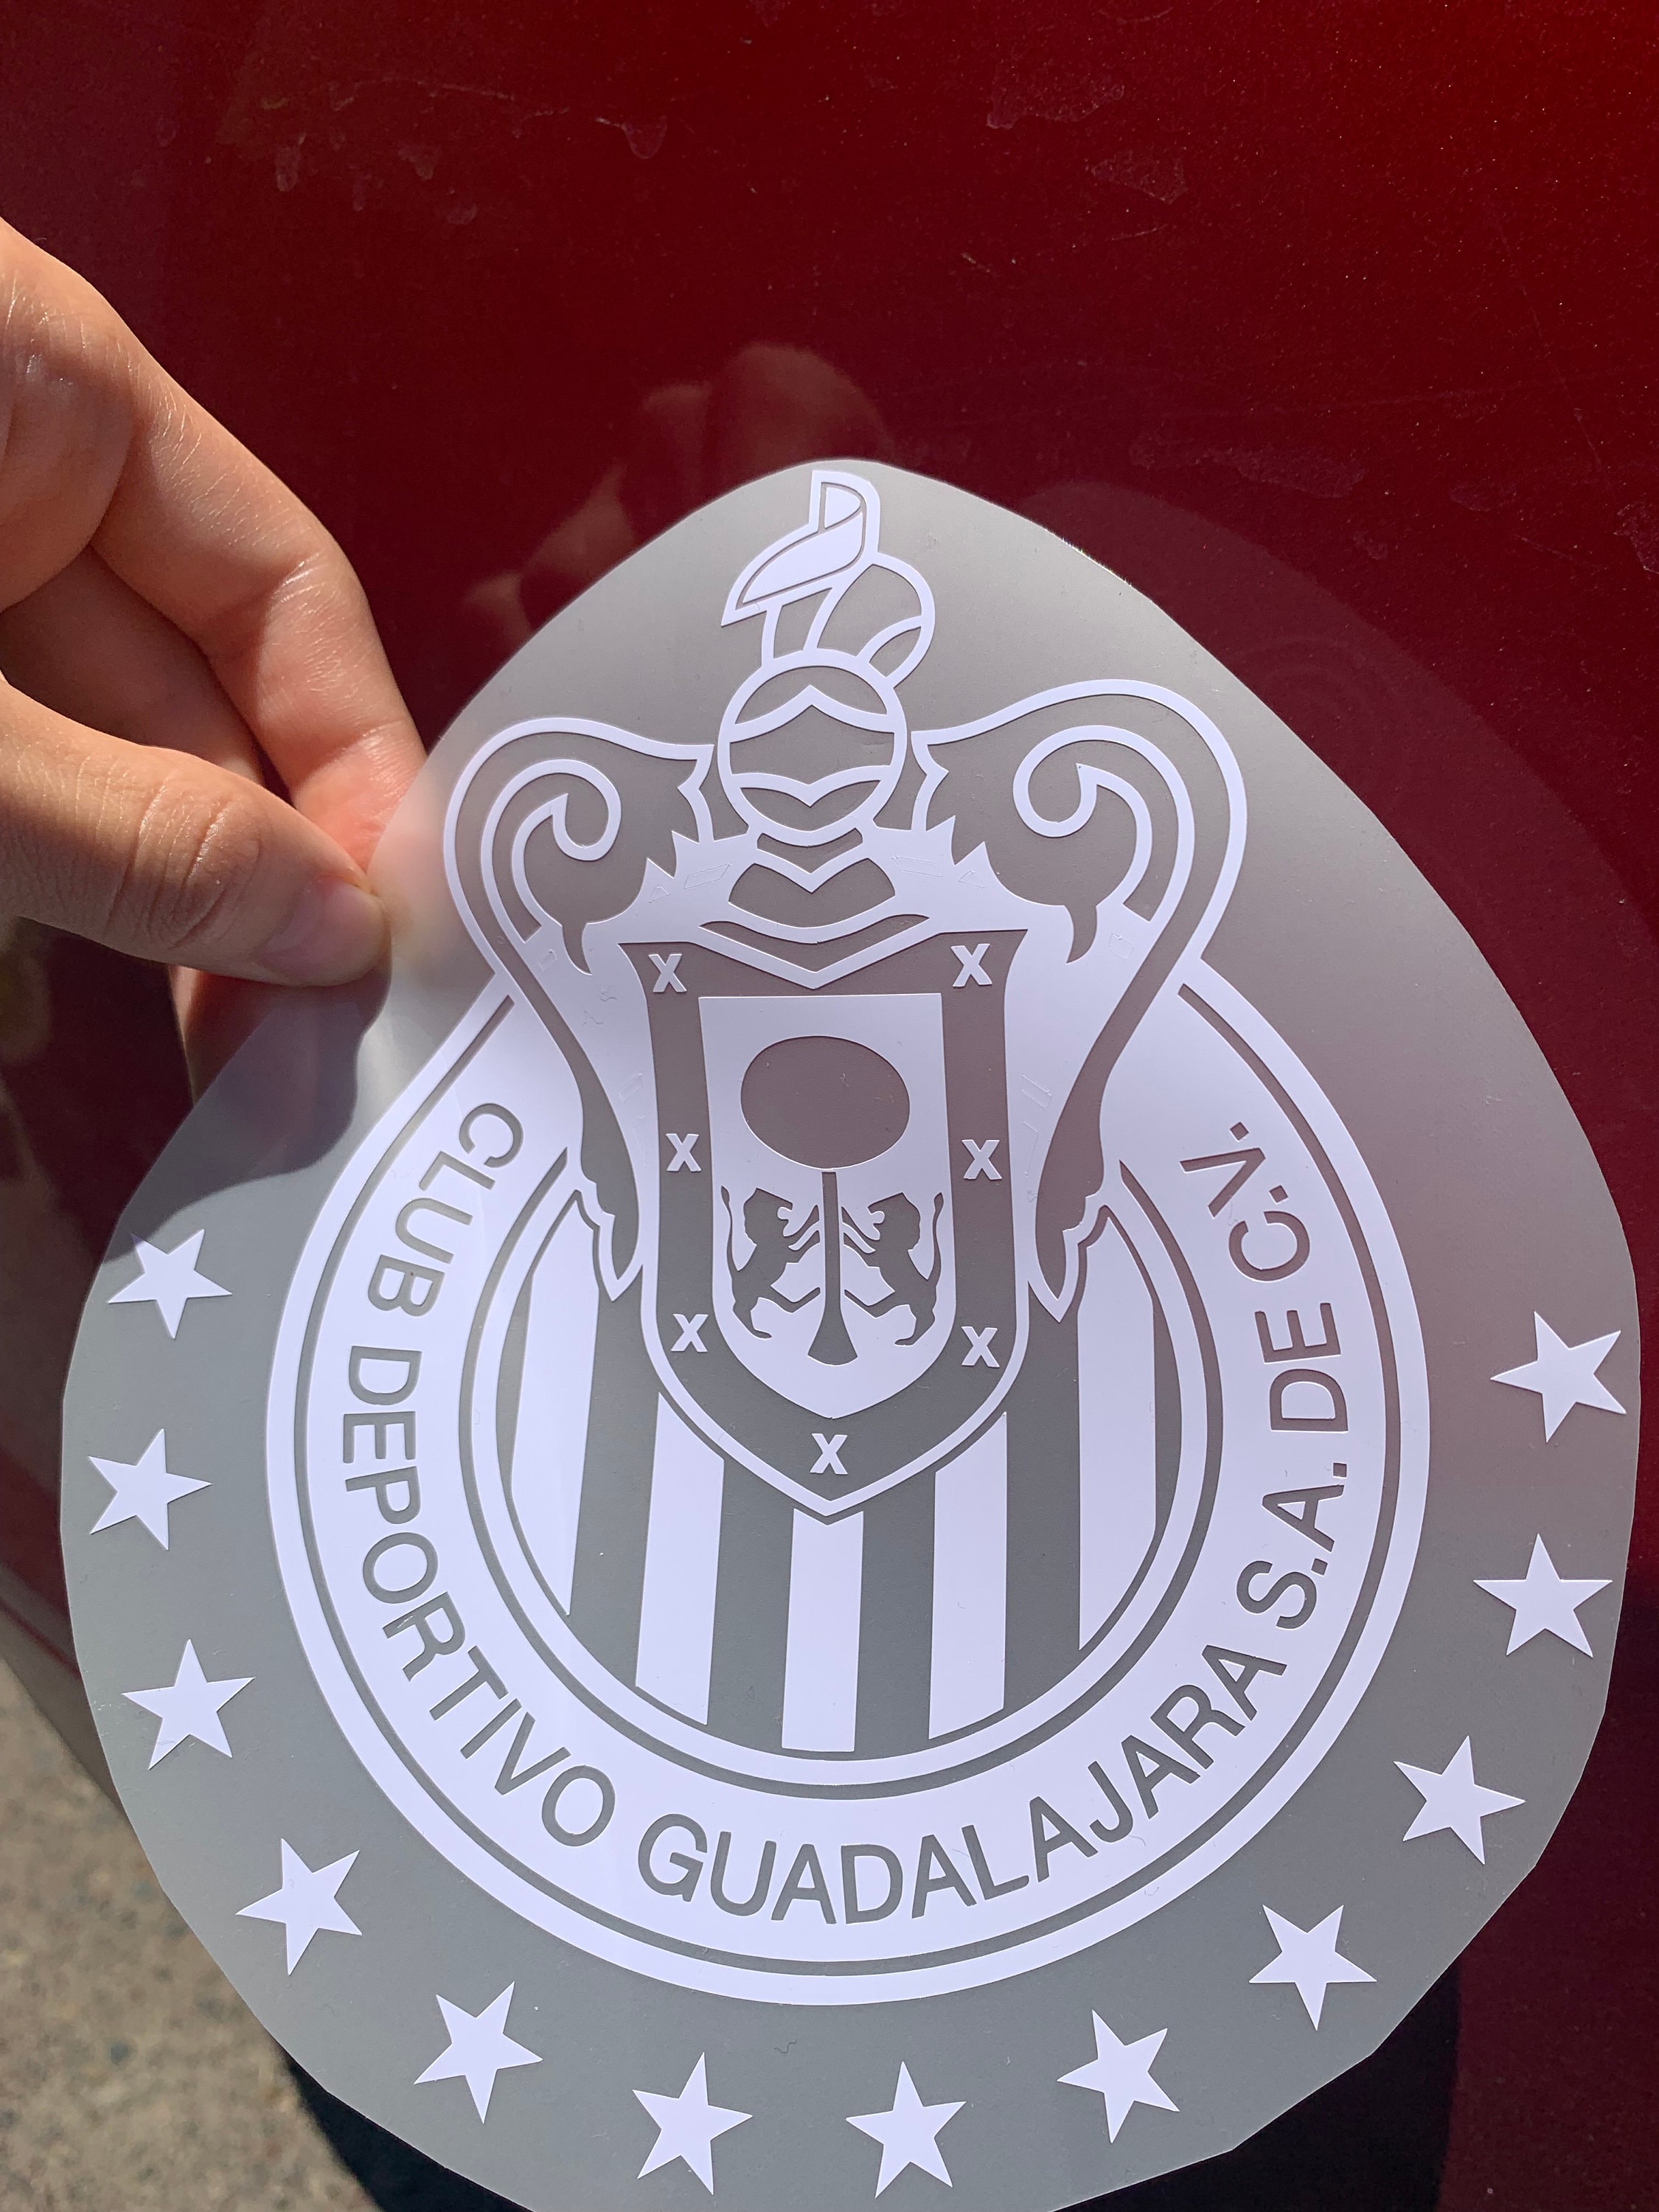 Chivas Guadalajara Decal Liga Mx Sticker Sports Team Variety of Colors ...